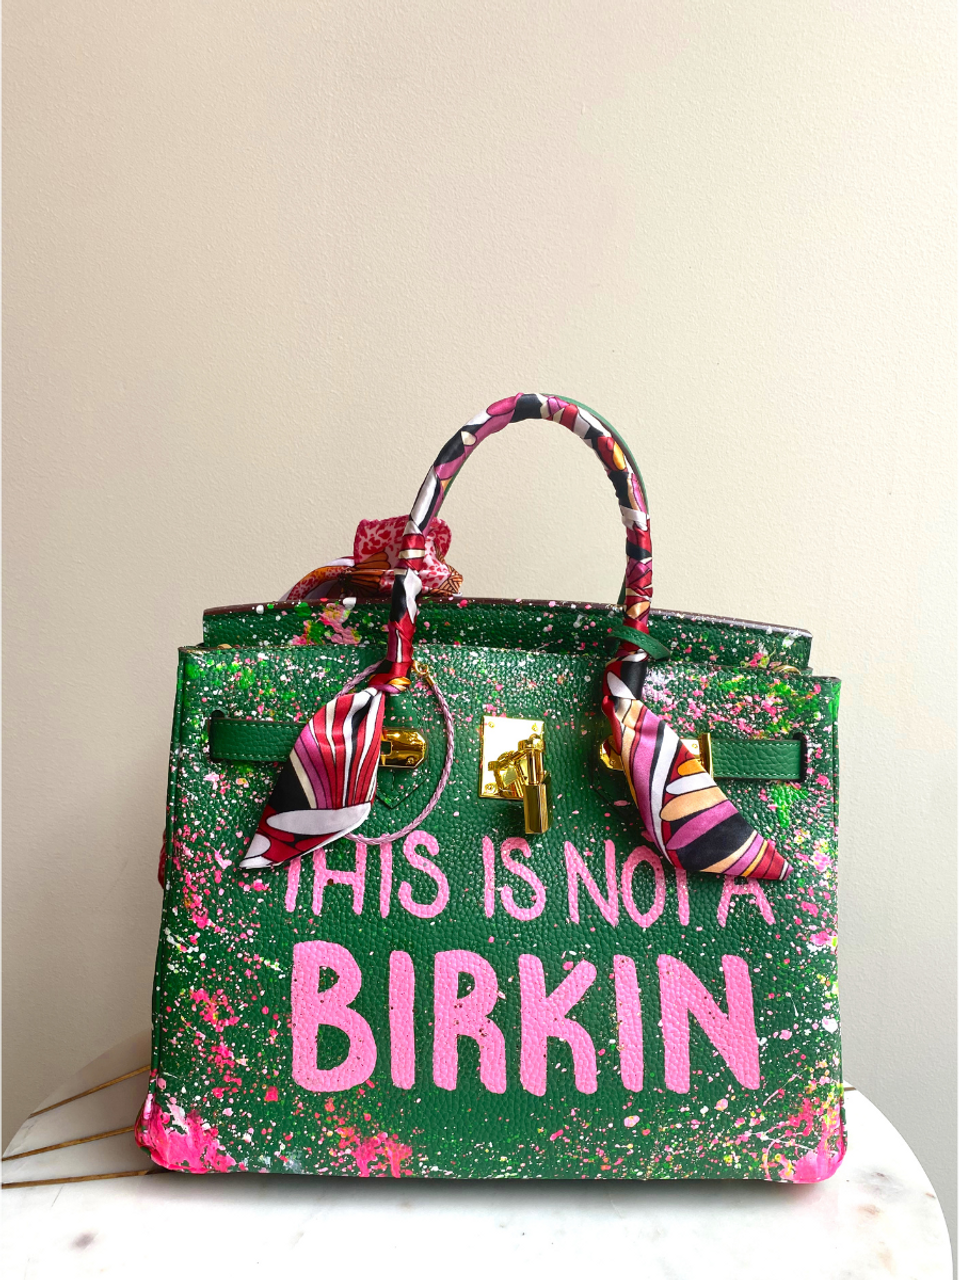 Bags, This Is Not A Birkin Birkin